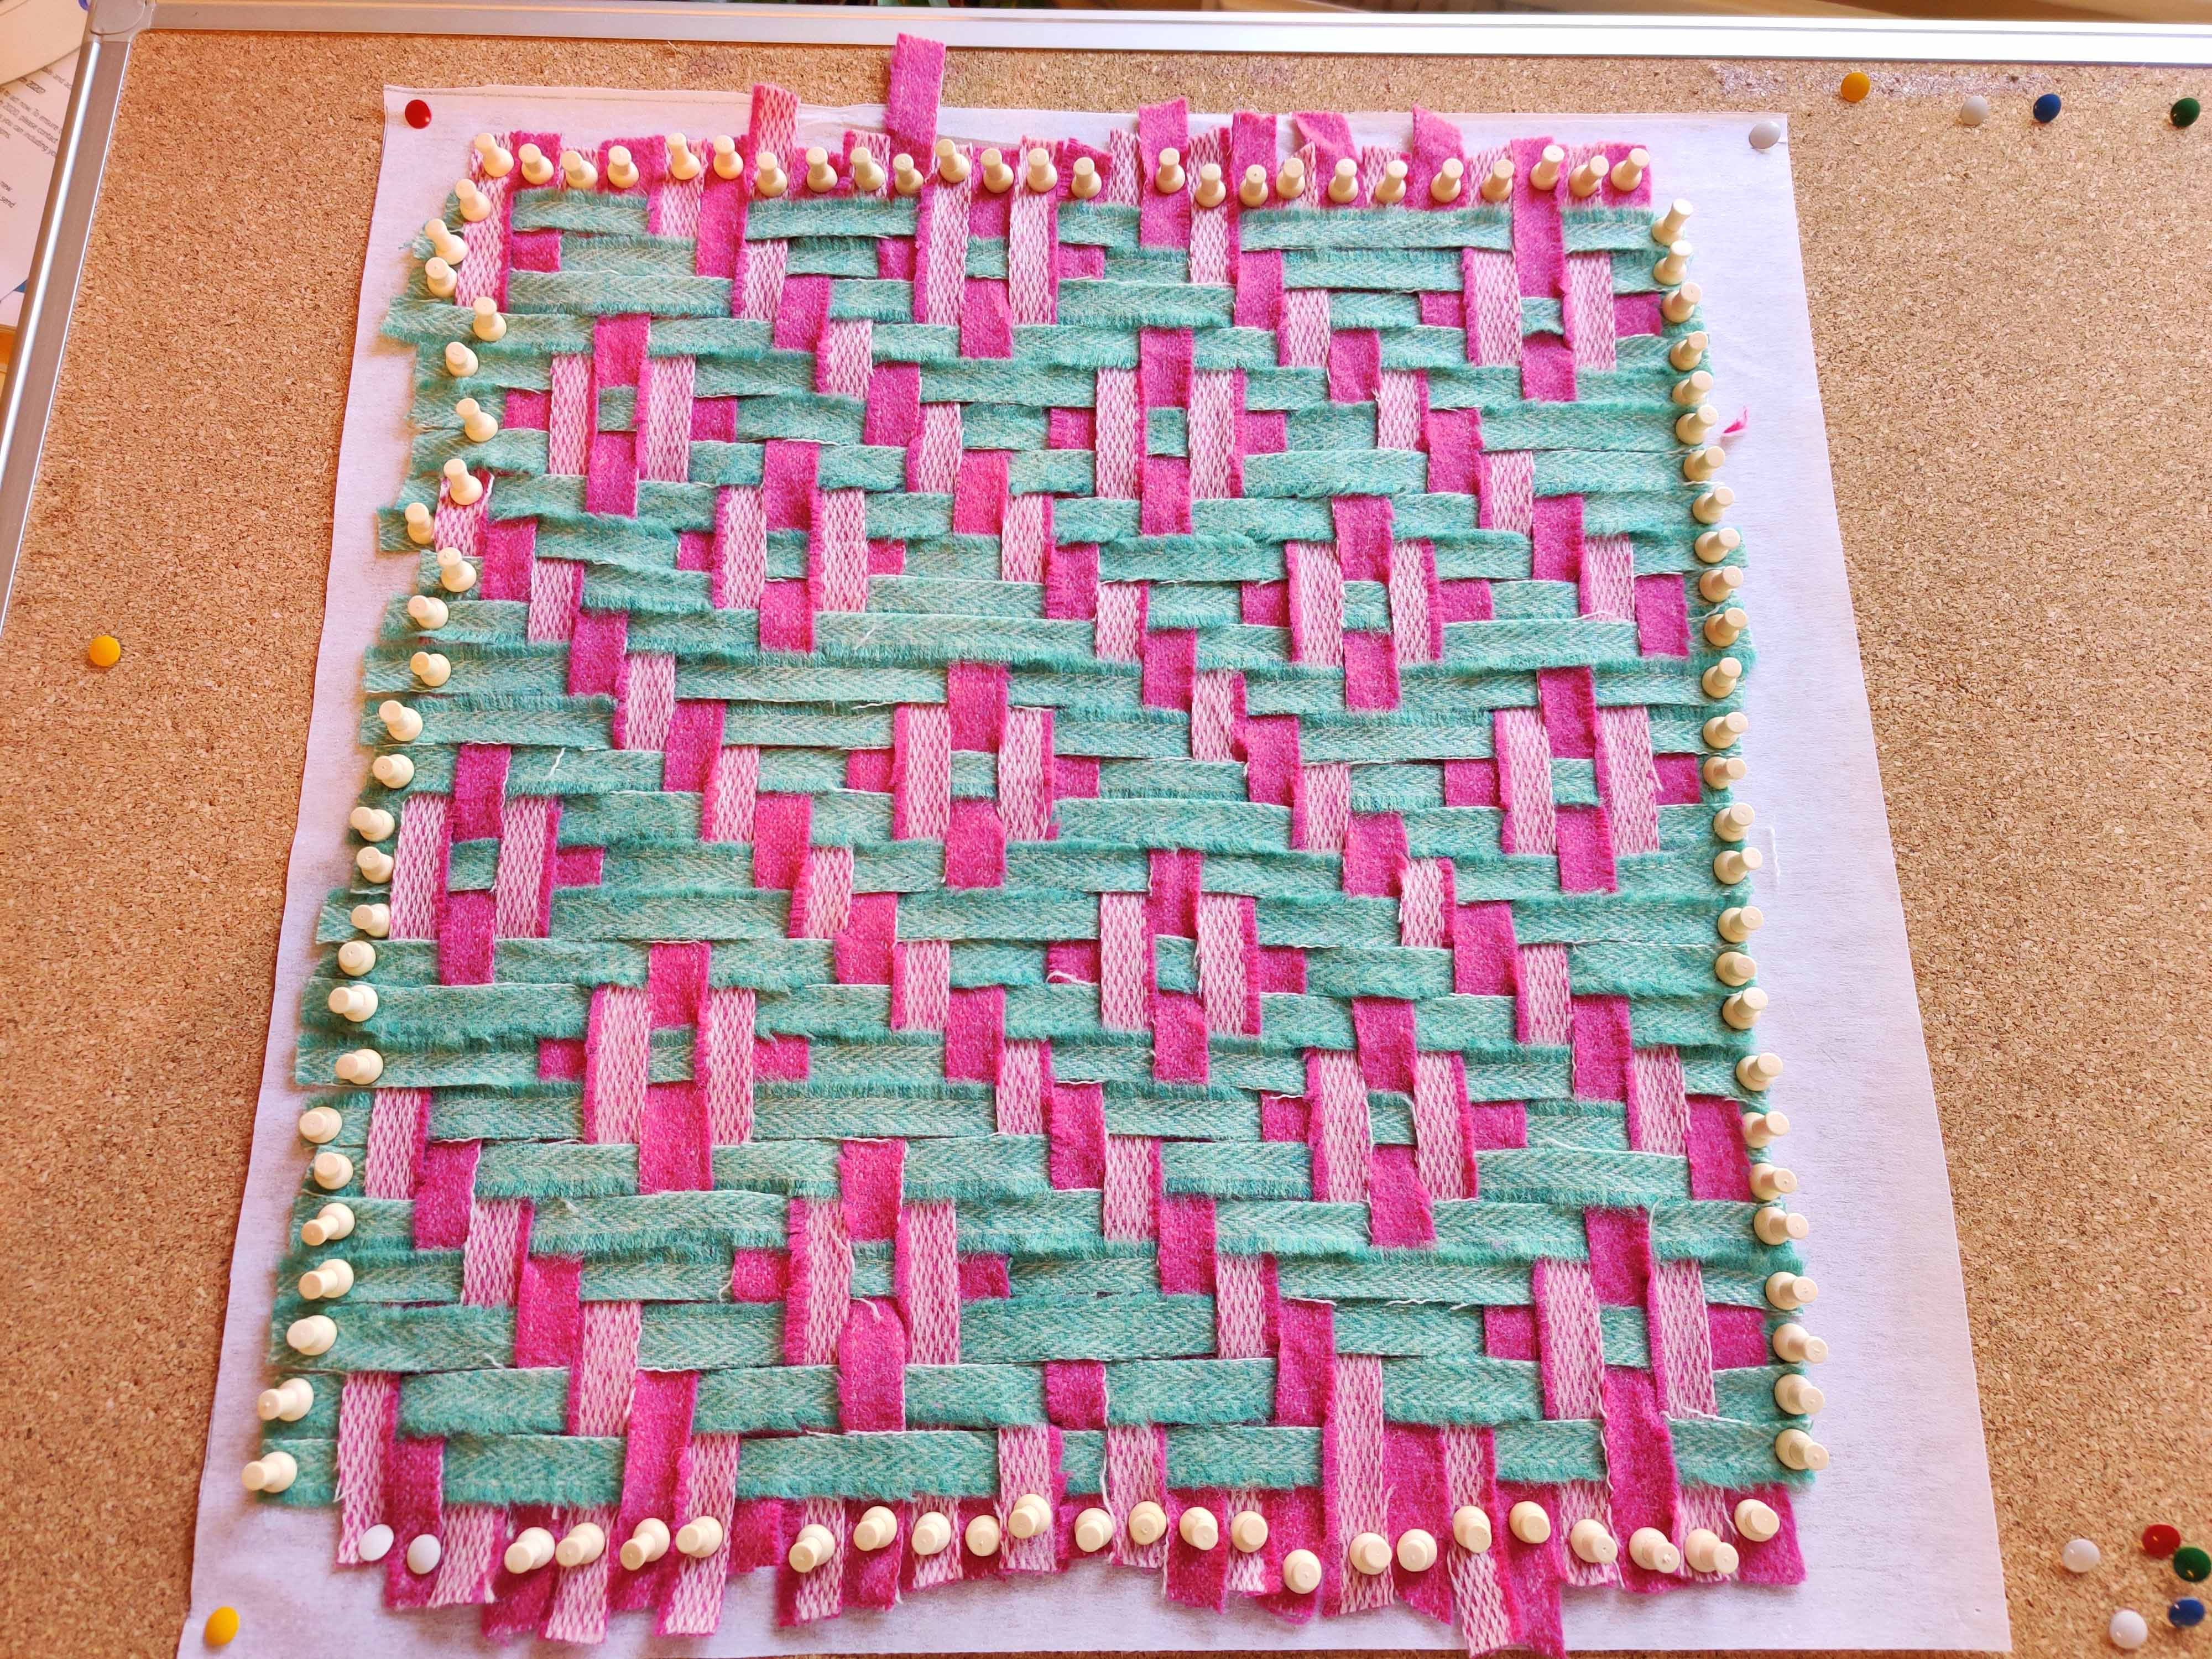 Handmade cushion made using ribbon weaving techniques